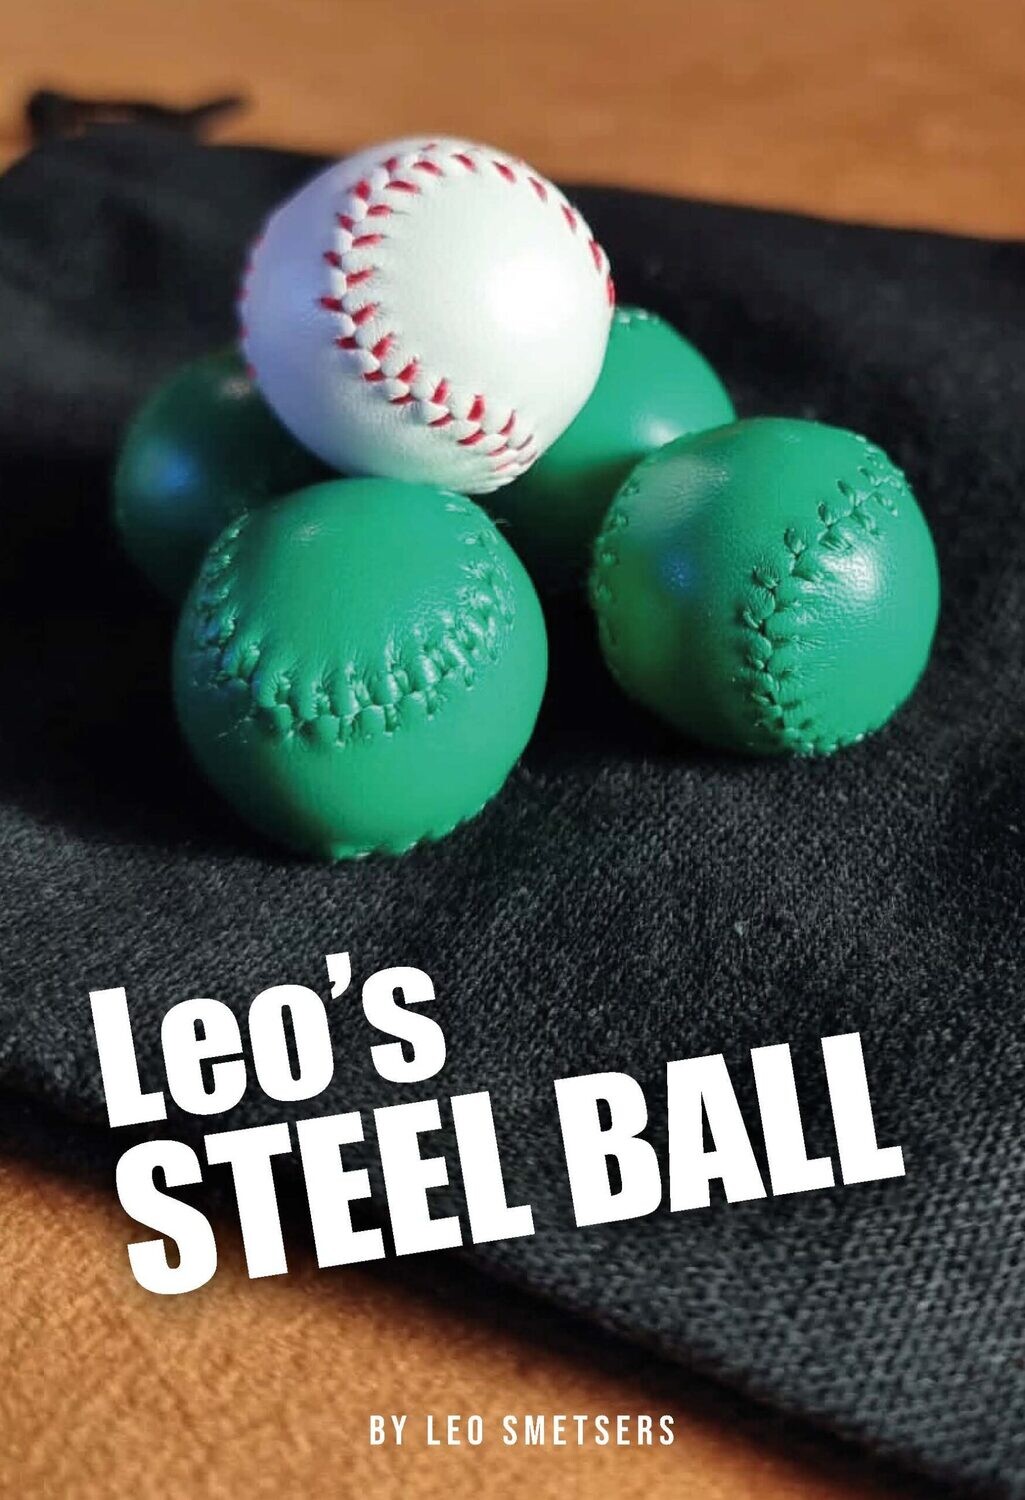 Leo’s Steel Ball